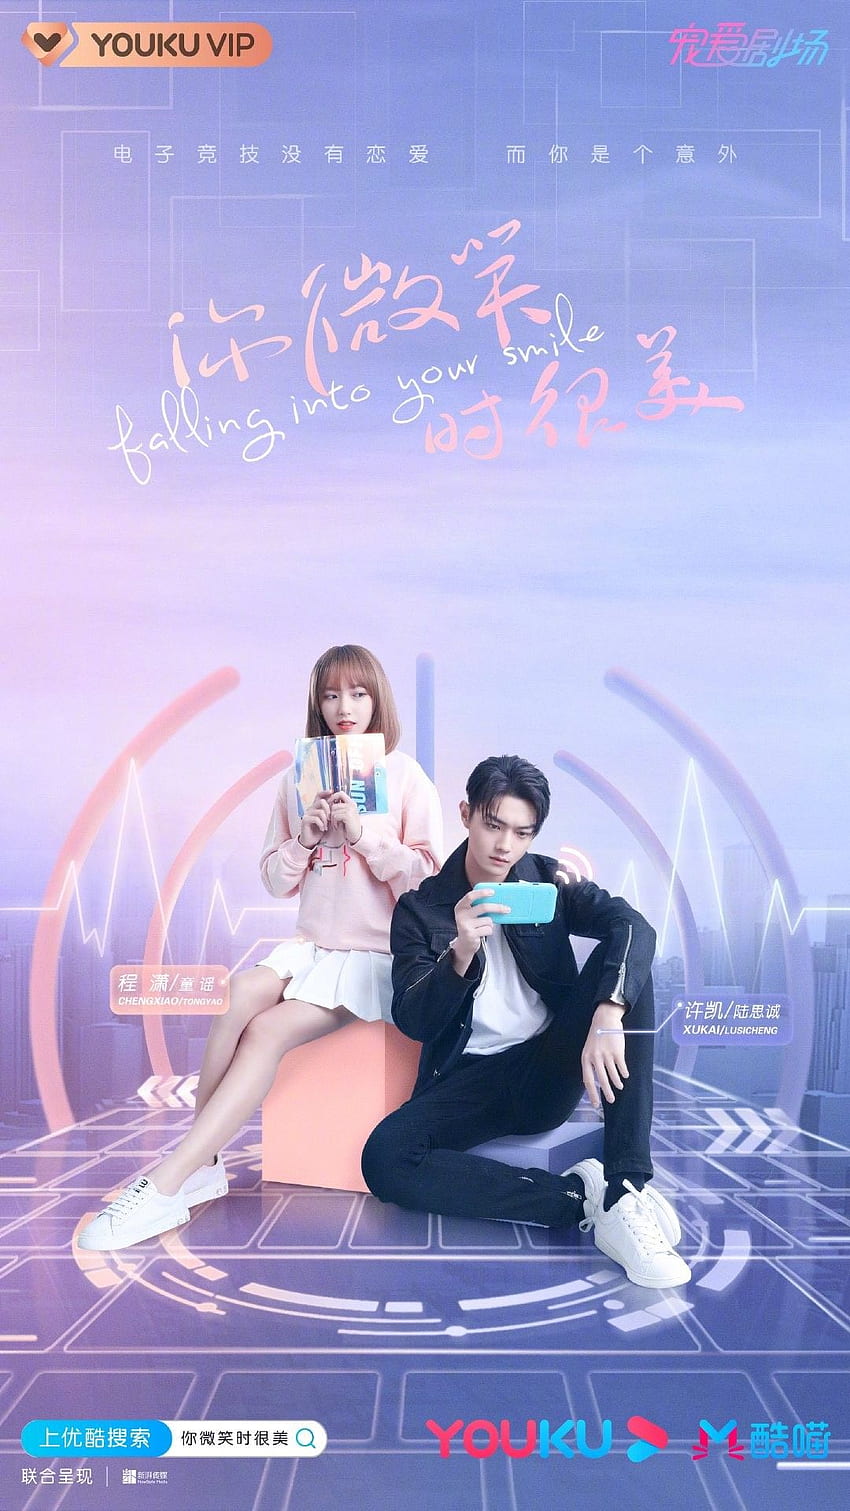 Jatuh ke Senyum Anda. Drama korea romantis, drama korea terbaik, daftar drama korea wallpaper ponsel HD